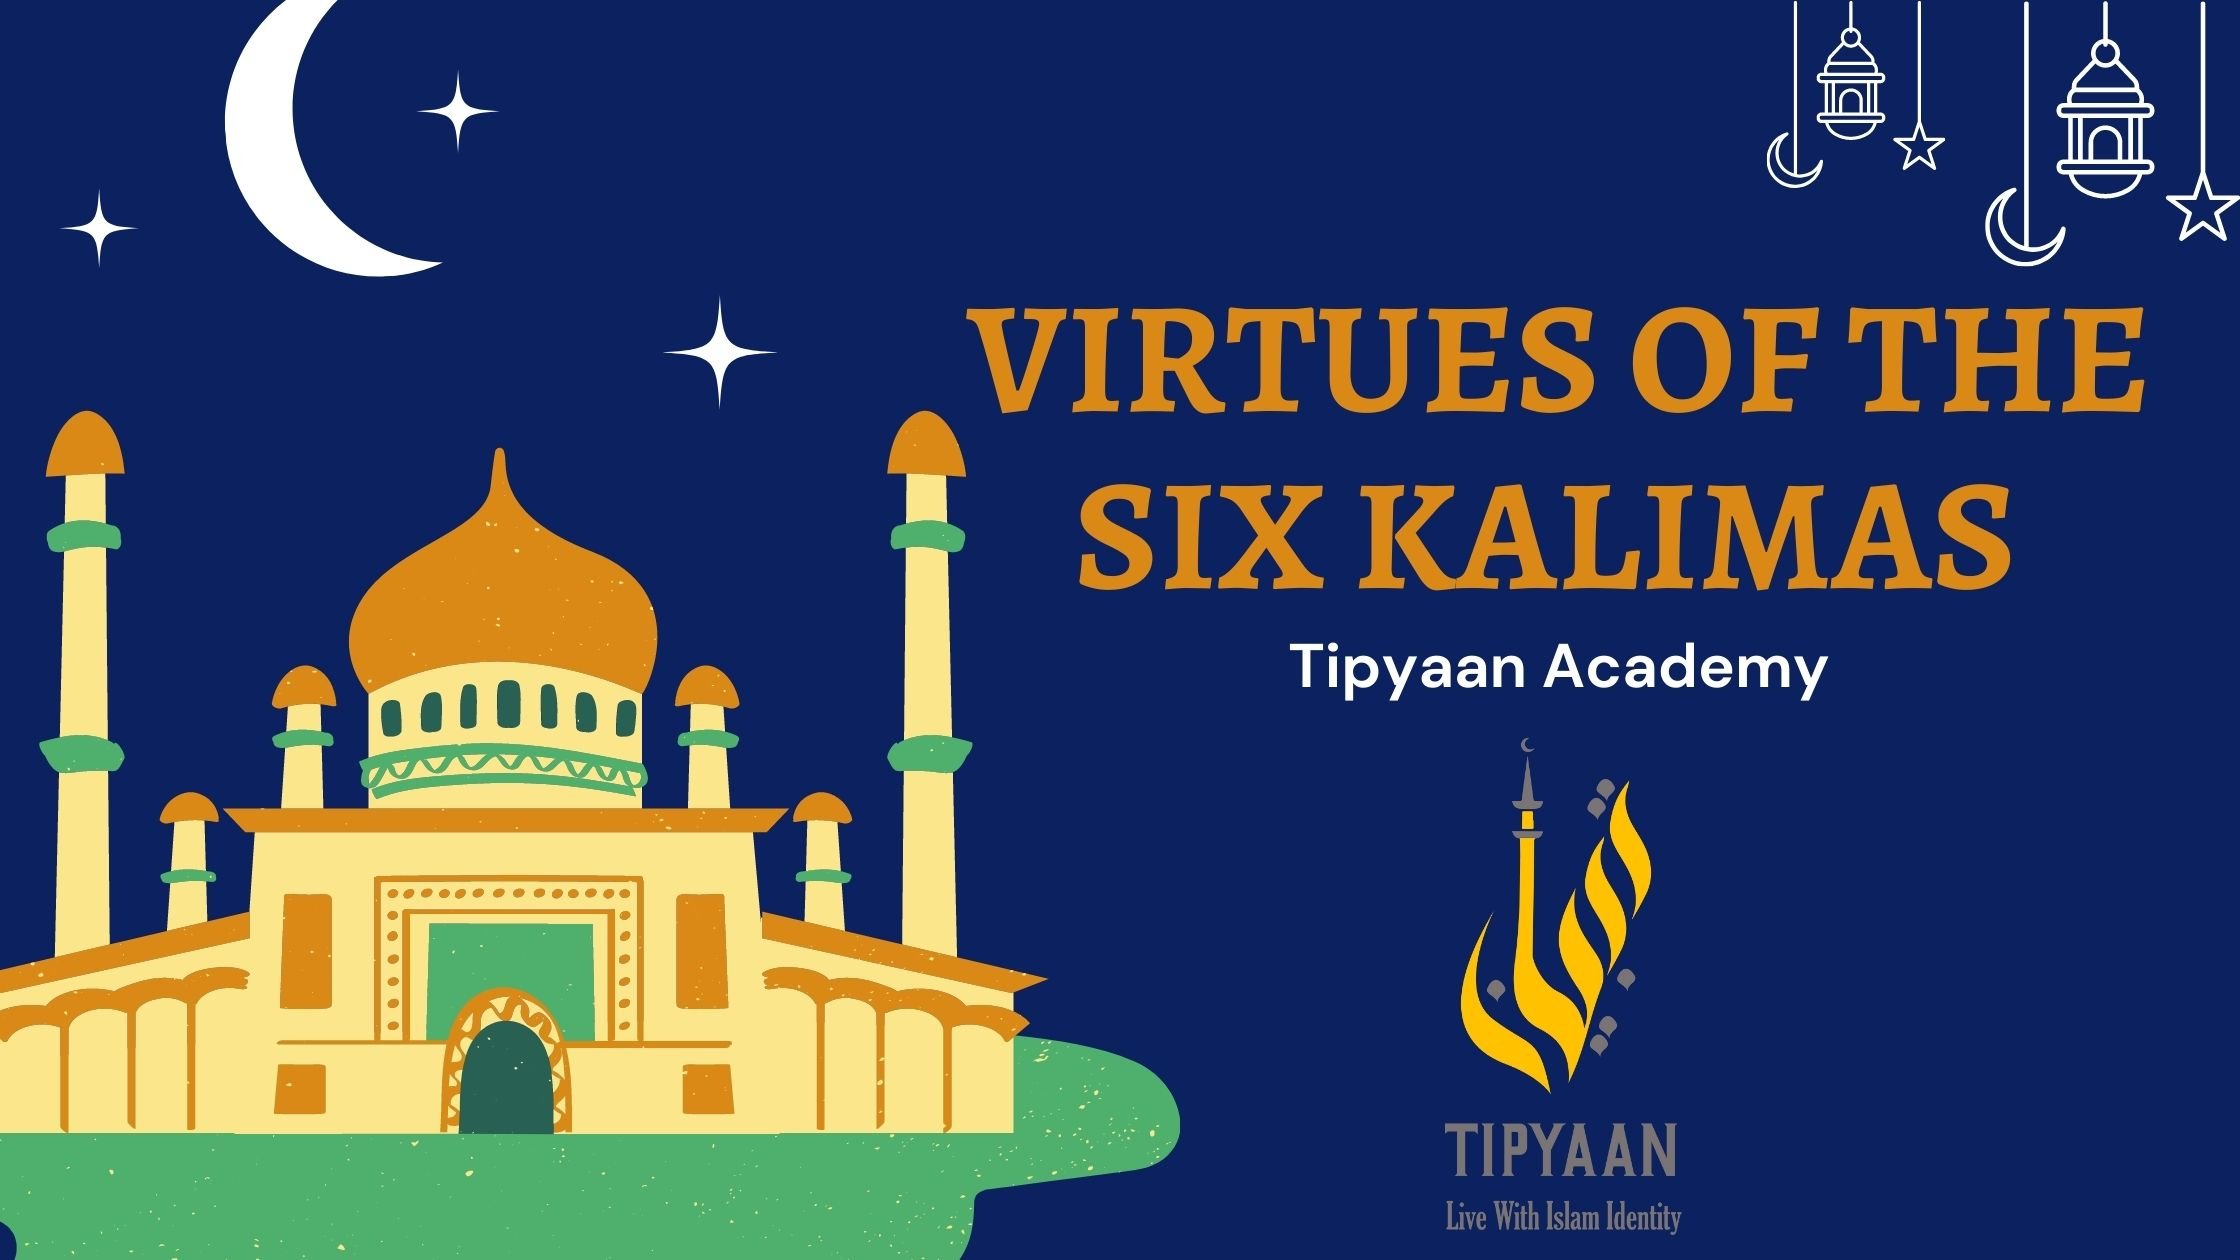 Virtues-of-the-six-kalimas